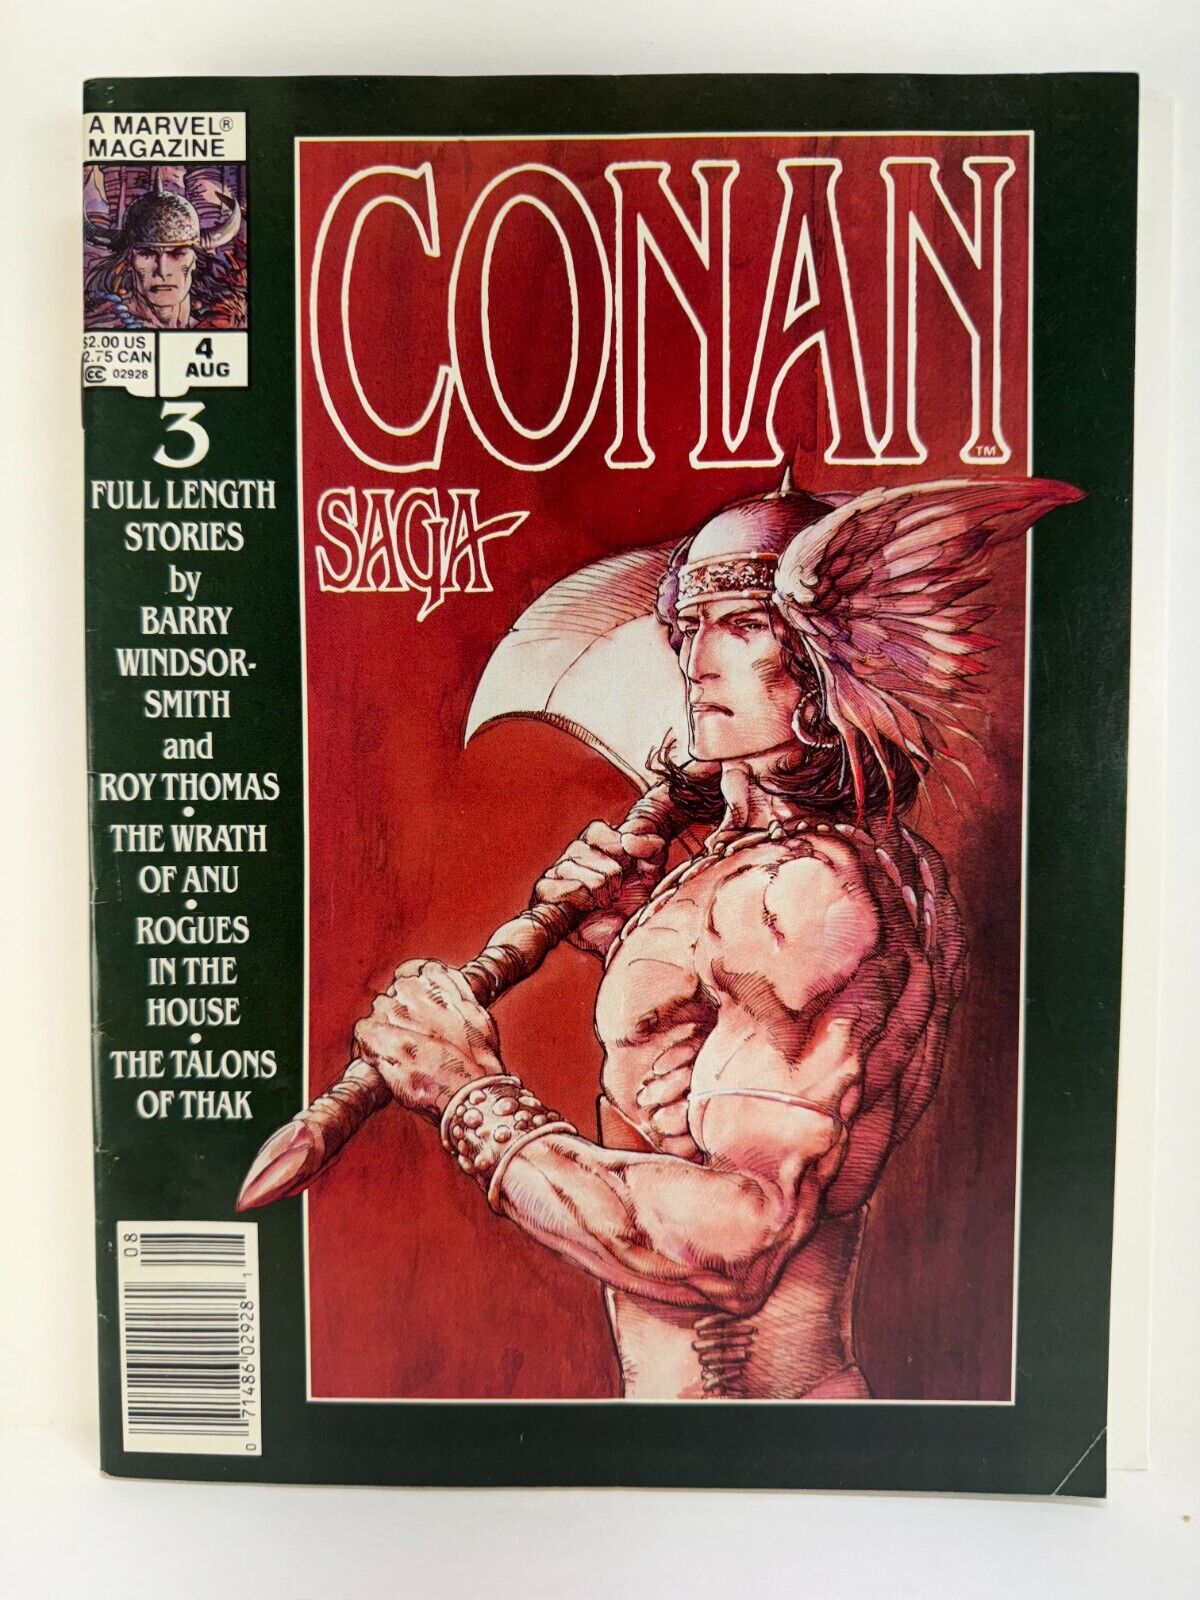 Individual CONAN SAGA Marvel Magazine Comic Books: You Pick, many choice issues